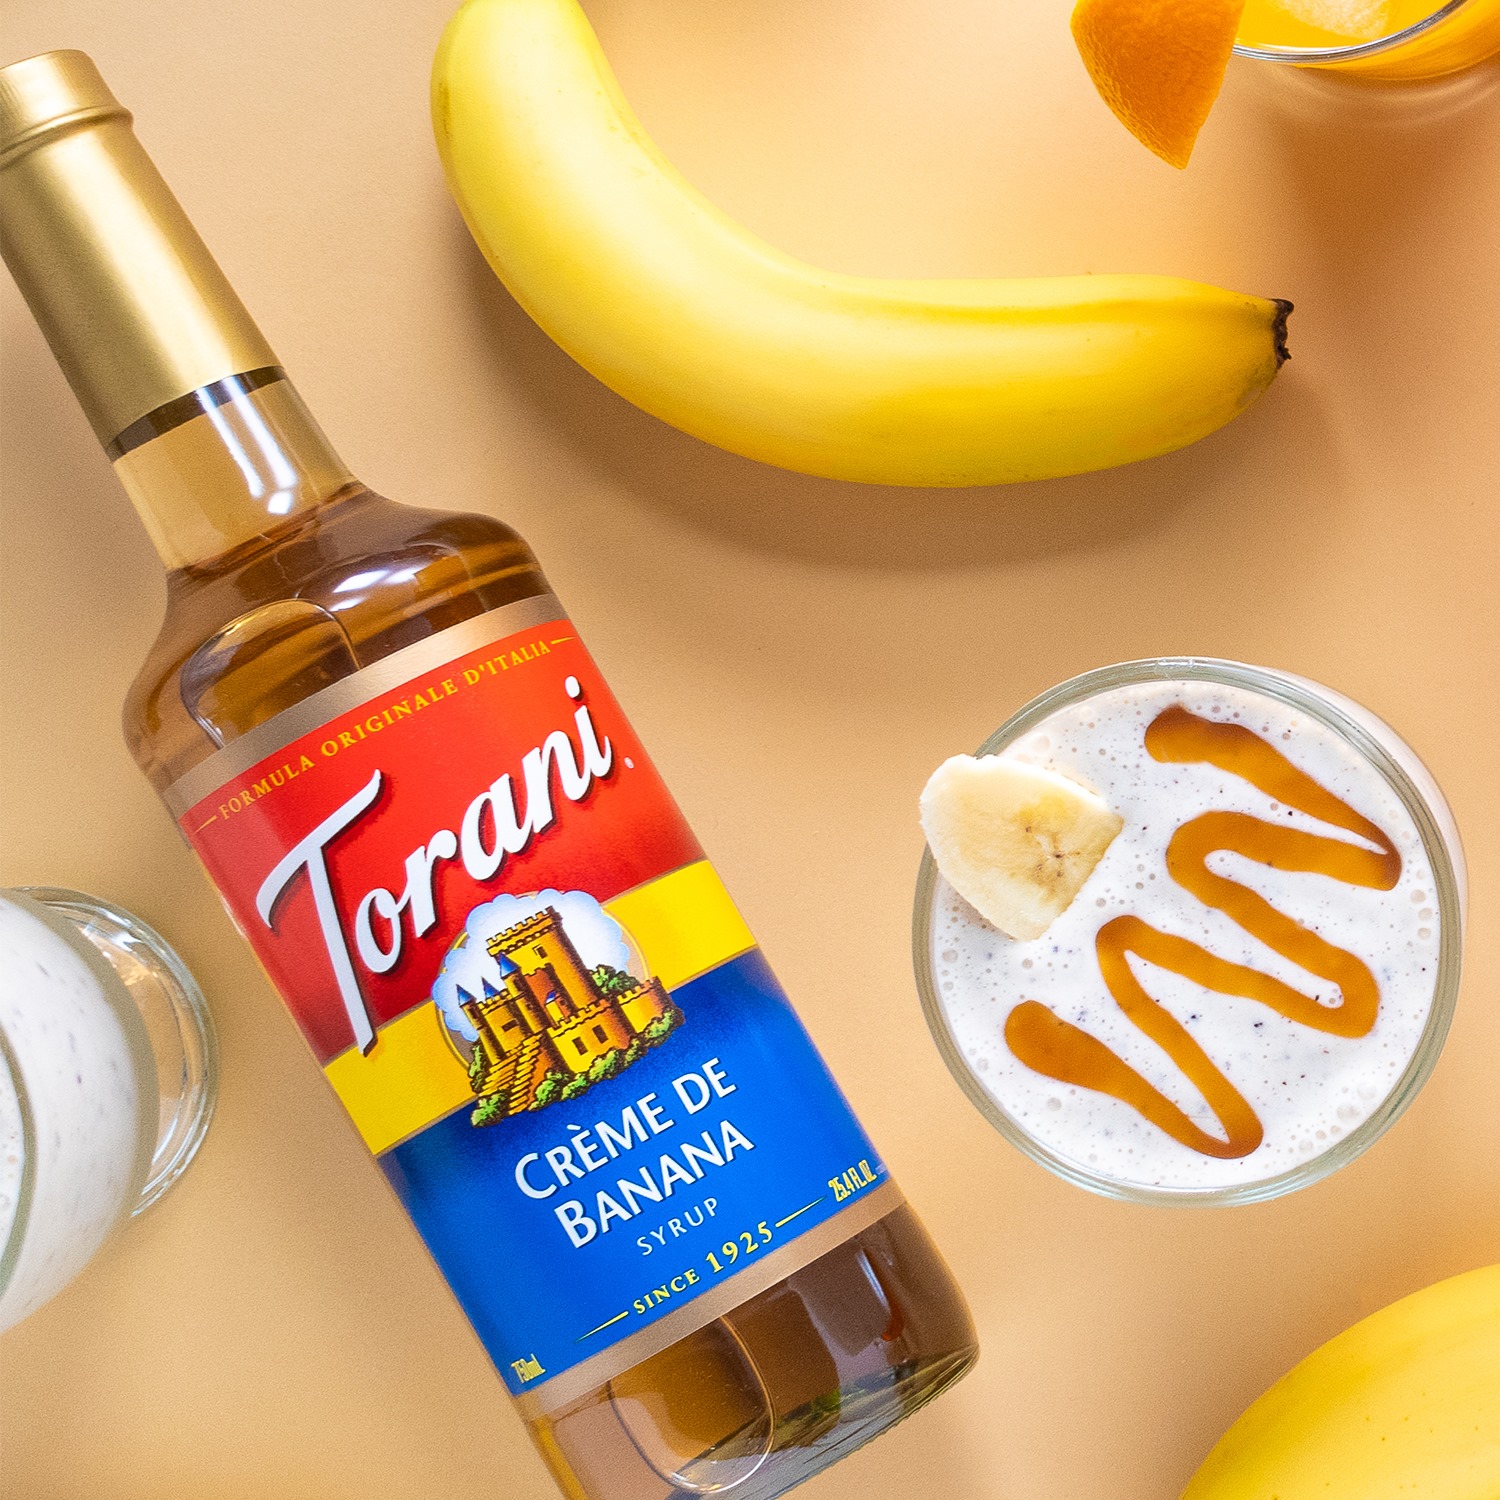 Siro Pha Chế Vị Kem Chuối Torani Classic Cream De Banana Syrup 750ml Mỹ